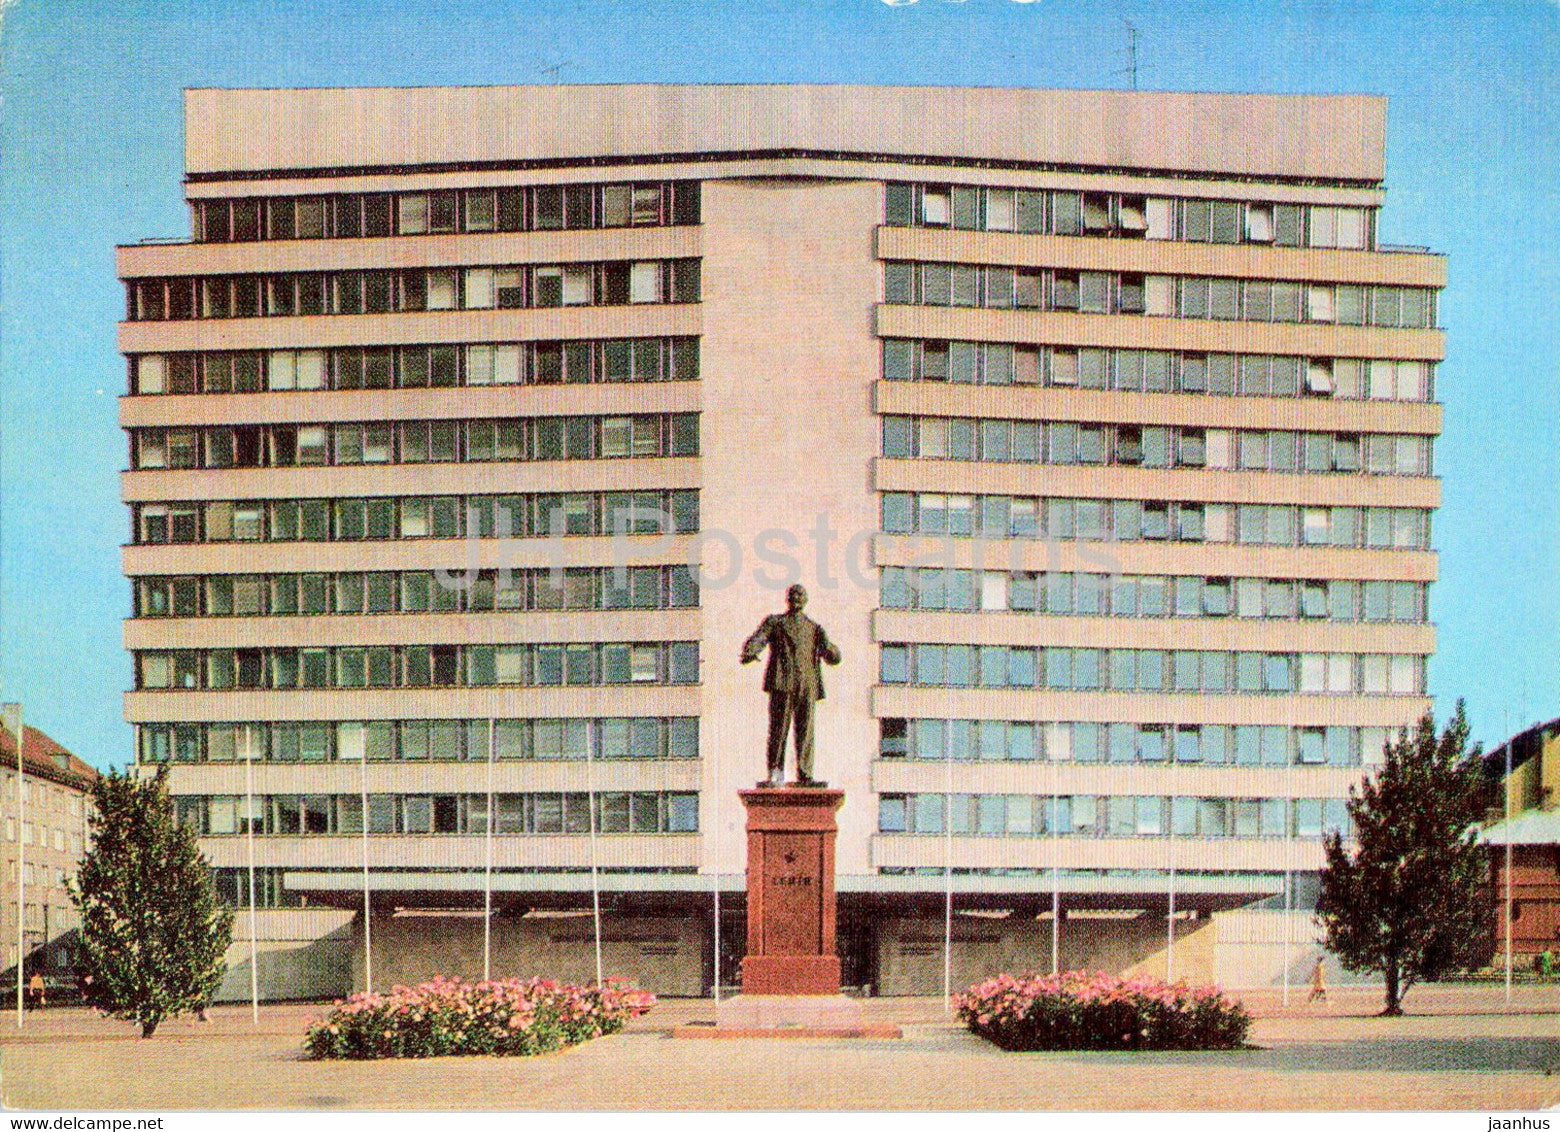 Tallinn - Central Committee building - monument to Lenin - postal stationery - 1977 - Estonia USSR - unused - JH Postcards